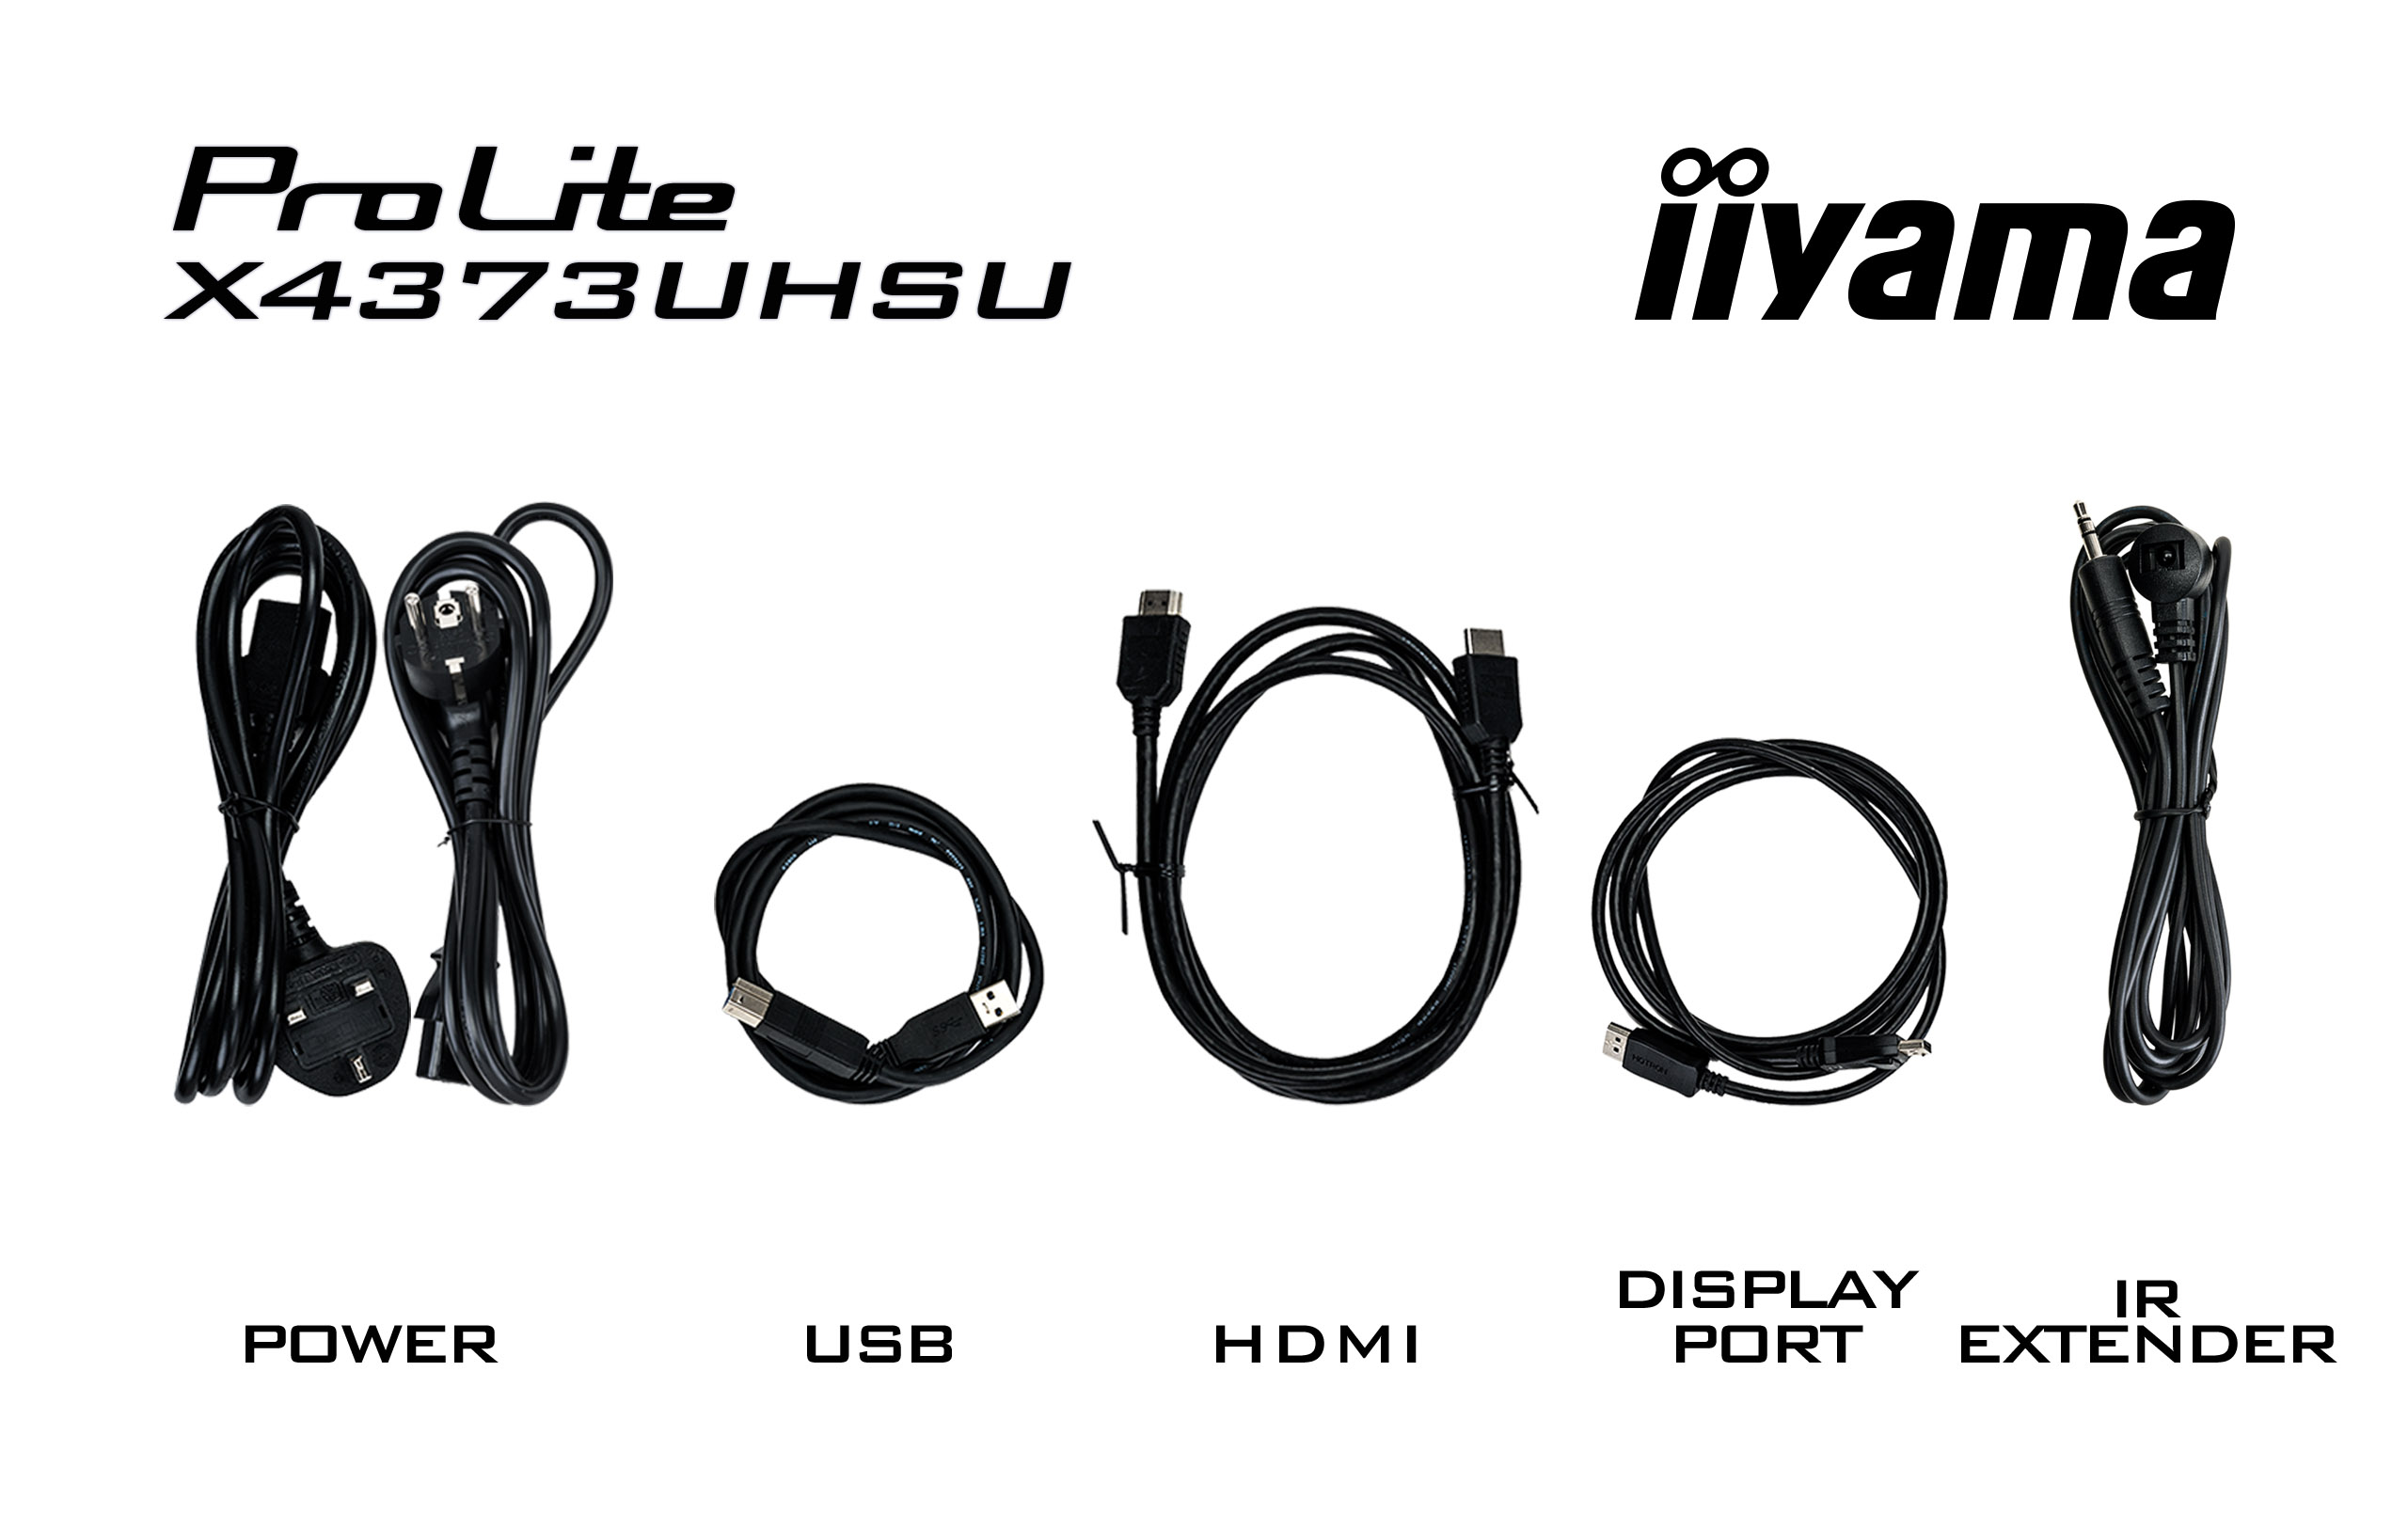 Iiyama ProLite X4373UHSU-B1 | 43" | 4K leistungsstarker Monitor